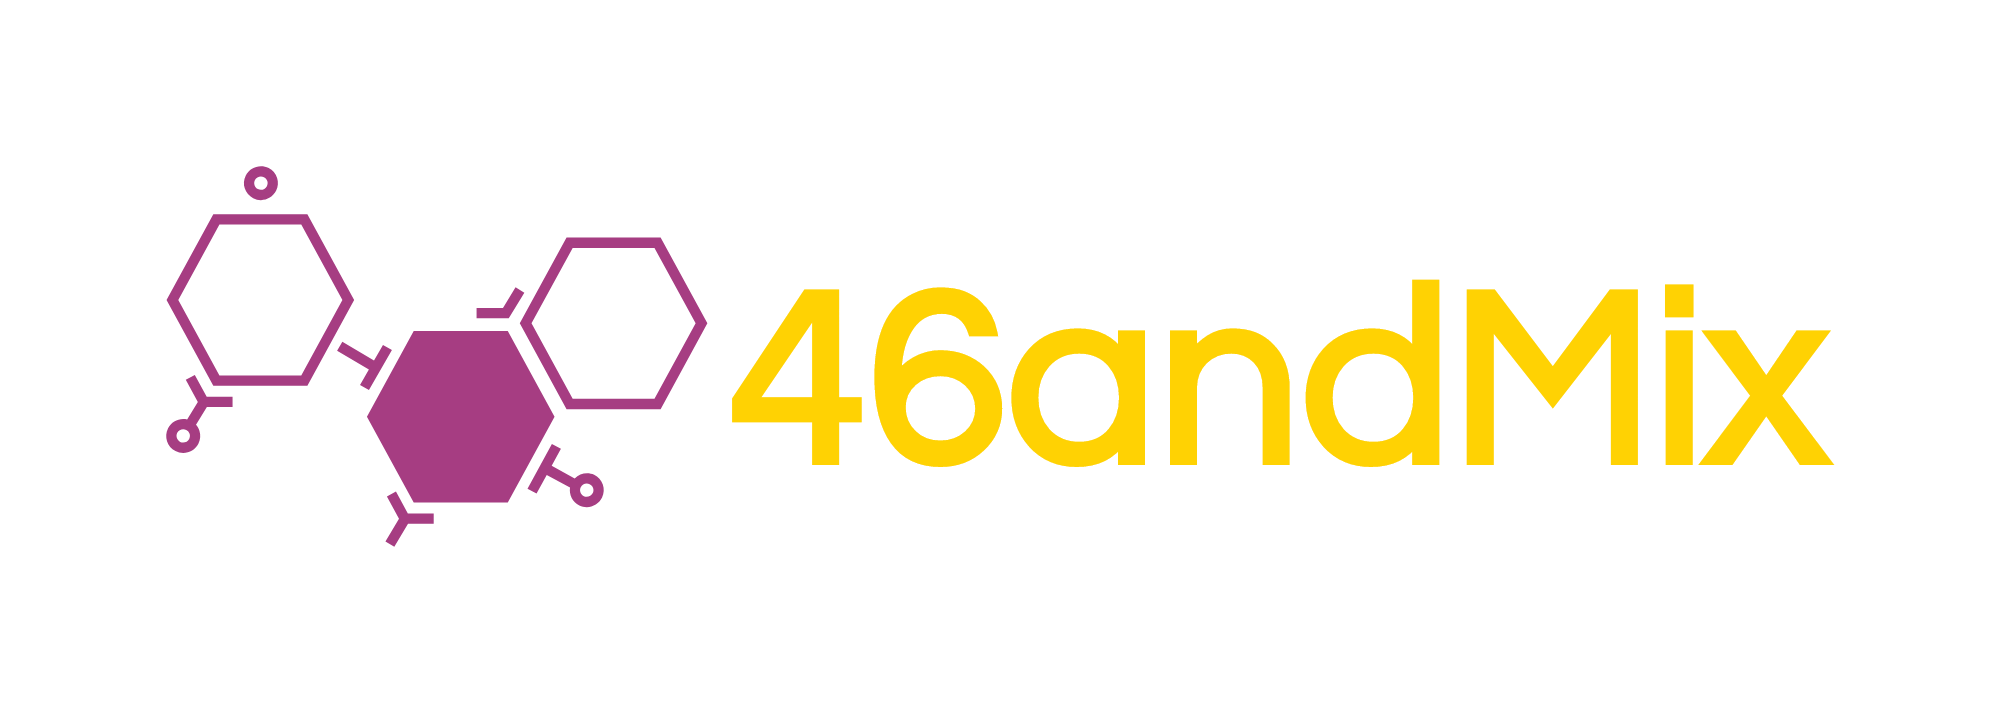 46andMix (Copy)